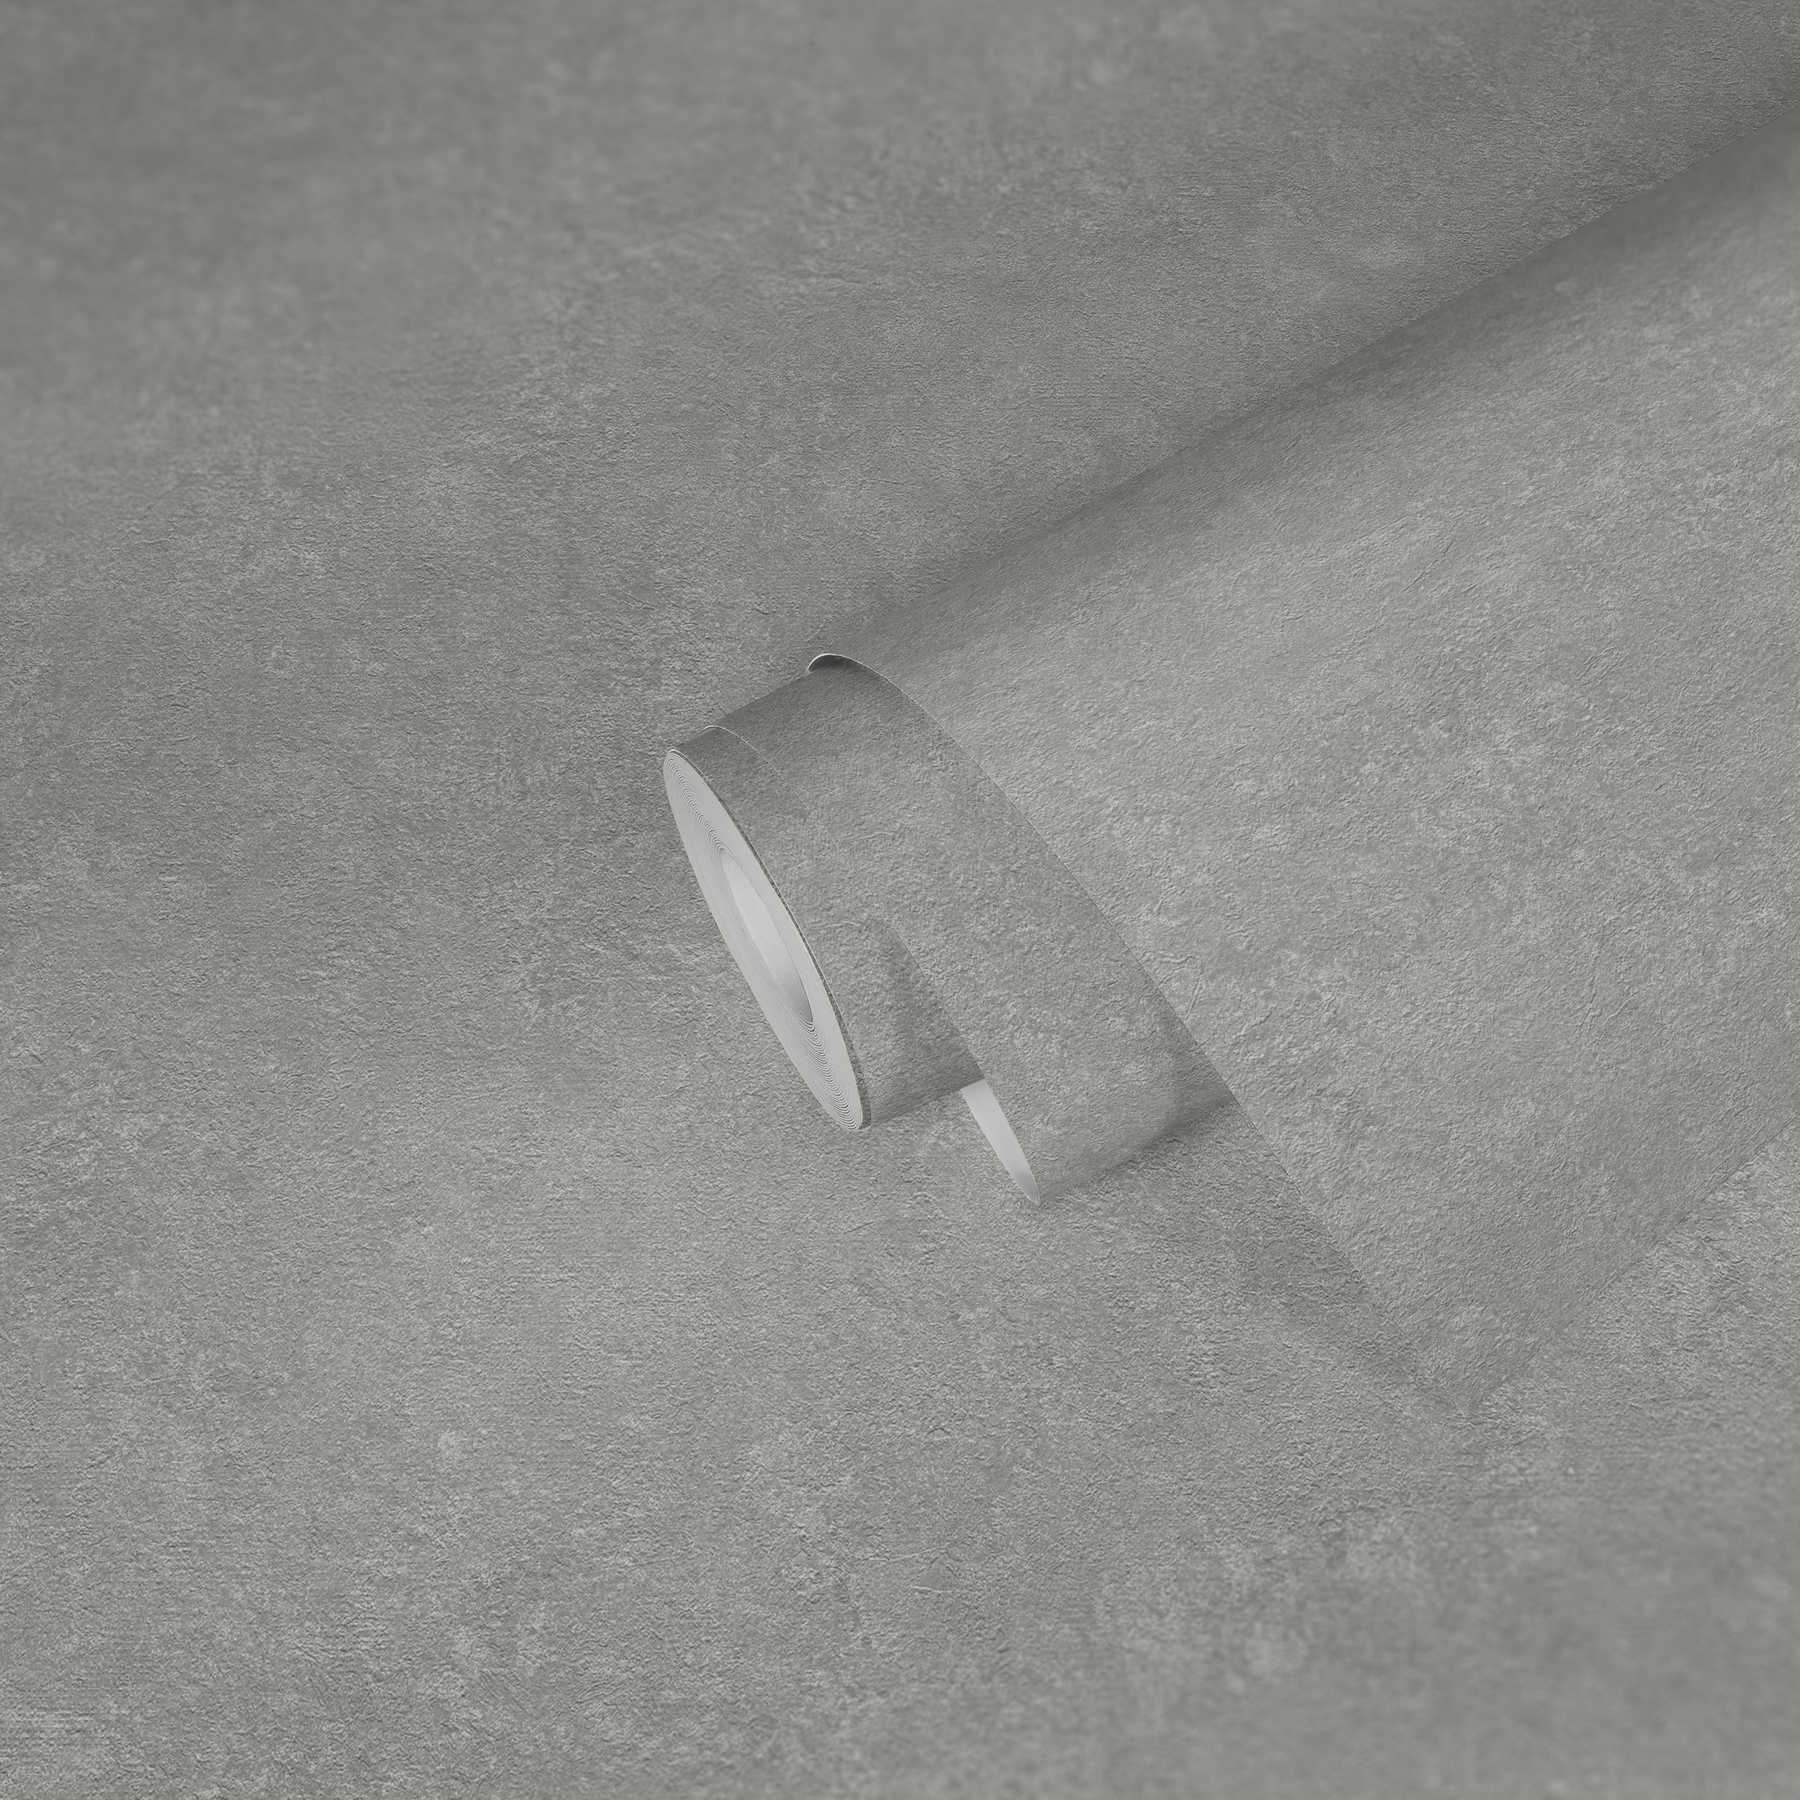             Metalloptik Tapete mit Rost-Akzenten im Industrial Style – Grau
        